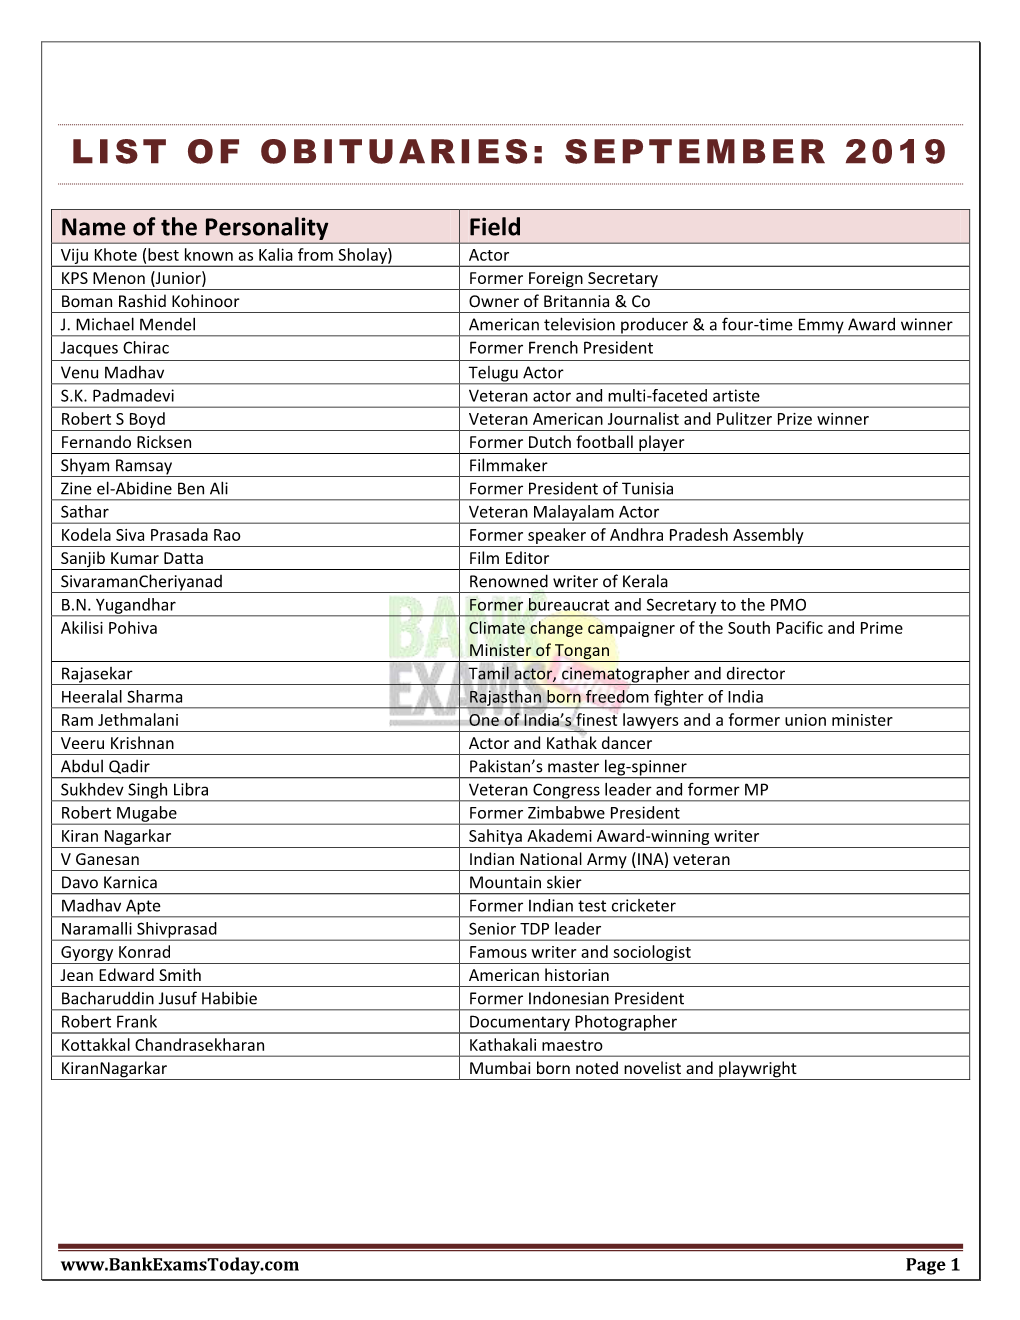 List of Obituaries: September 2019